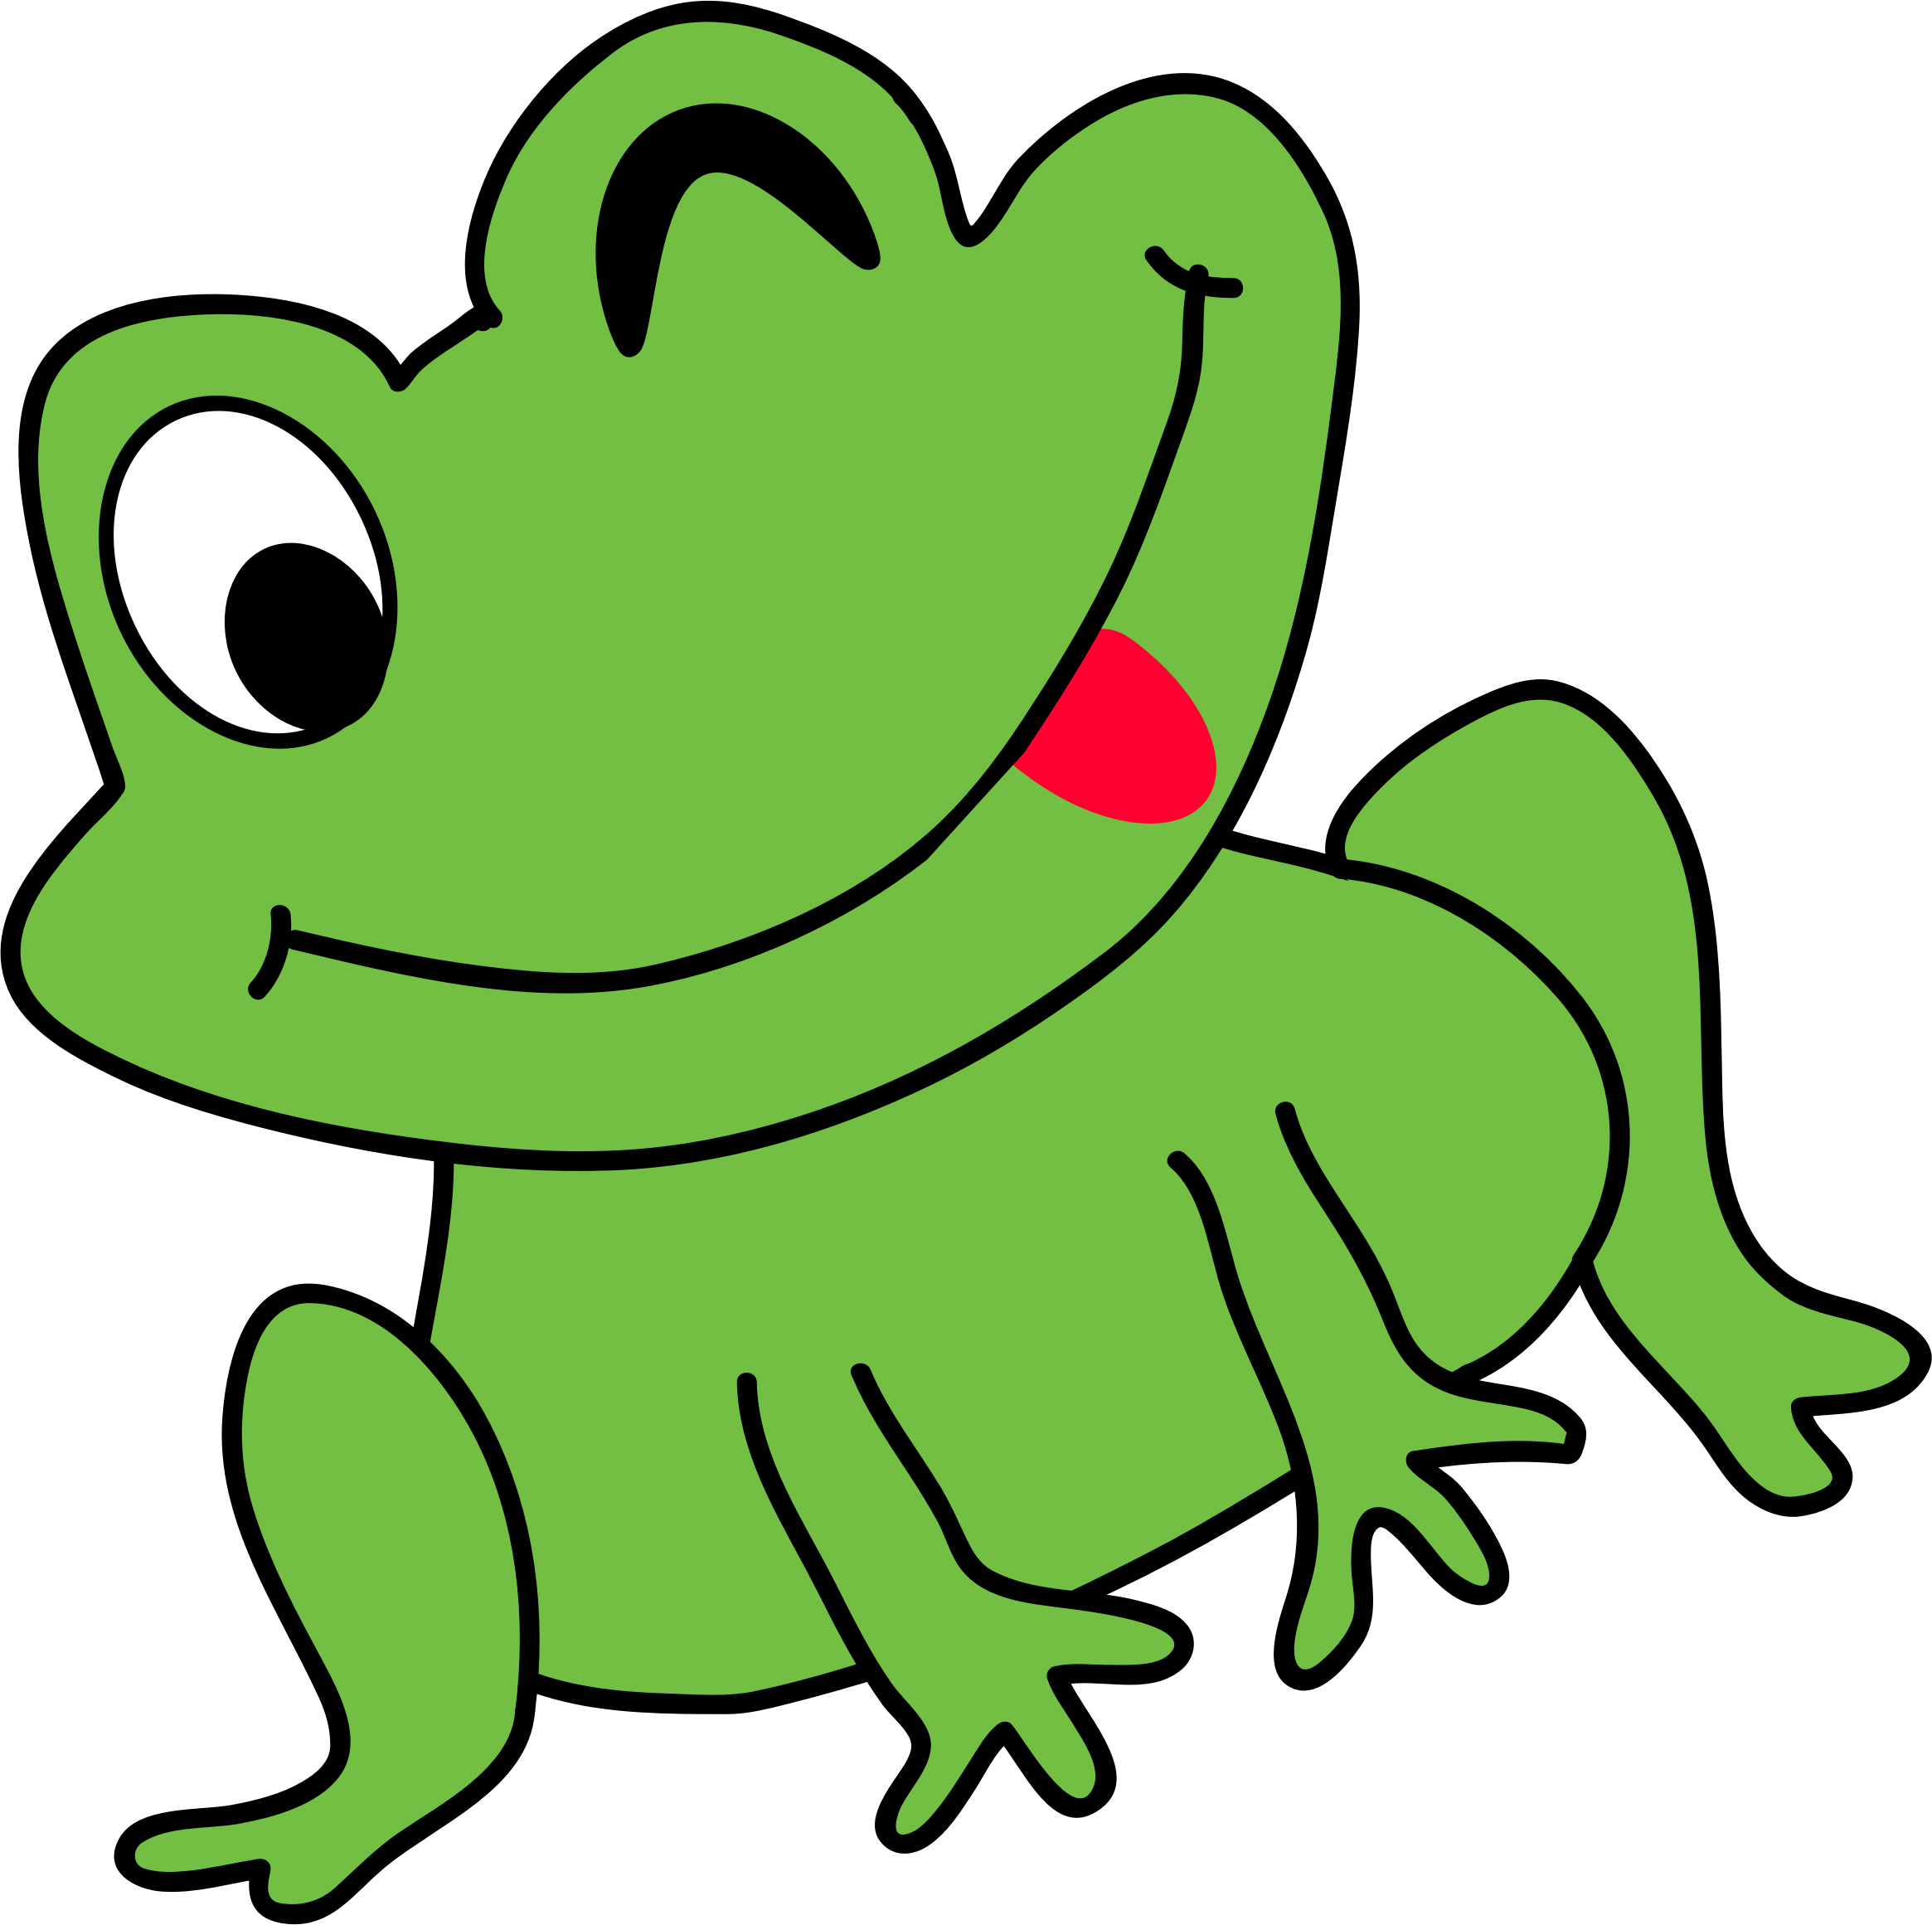 Картинка для детей лягушка на прозрачном фоне. Лягушка Froggy. Лягушки мультяшные. Мультяшный Лягушонок. Лягушка рисунок для детей.